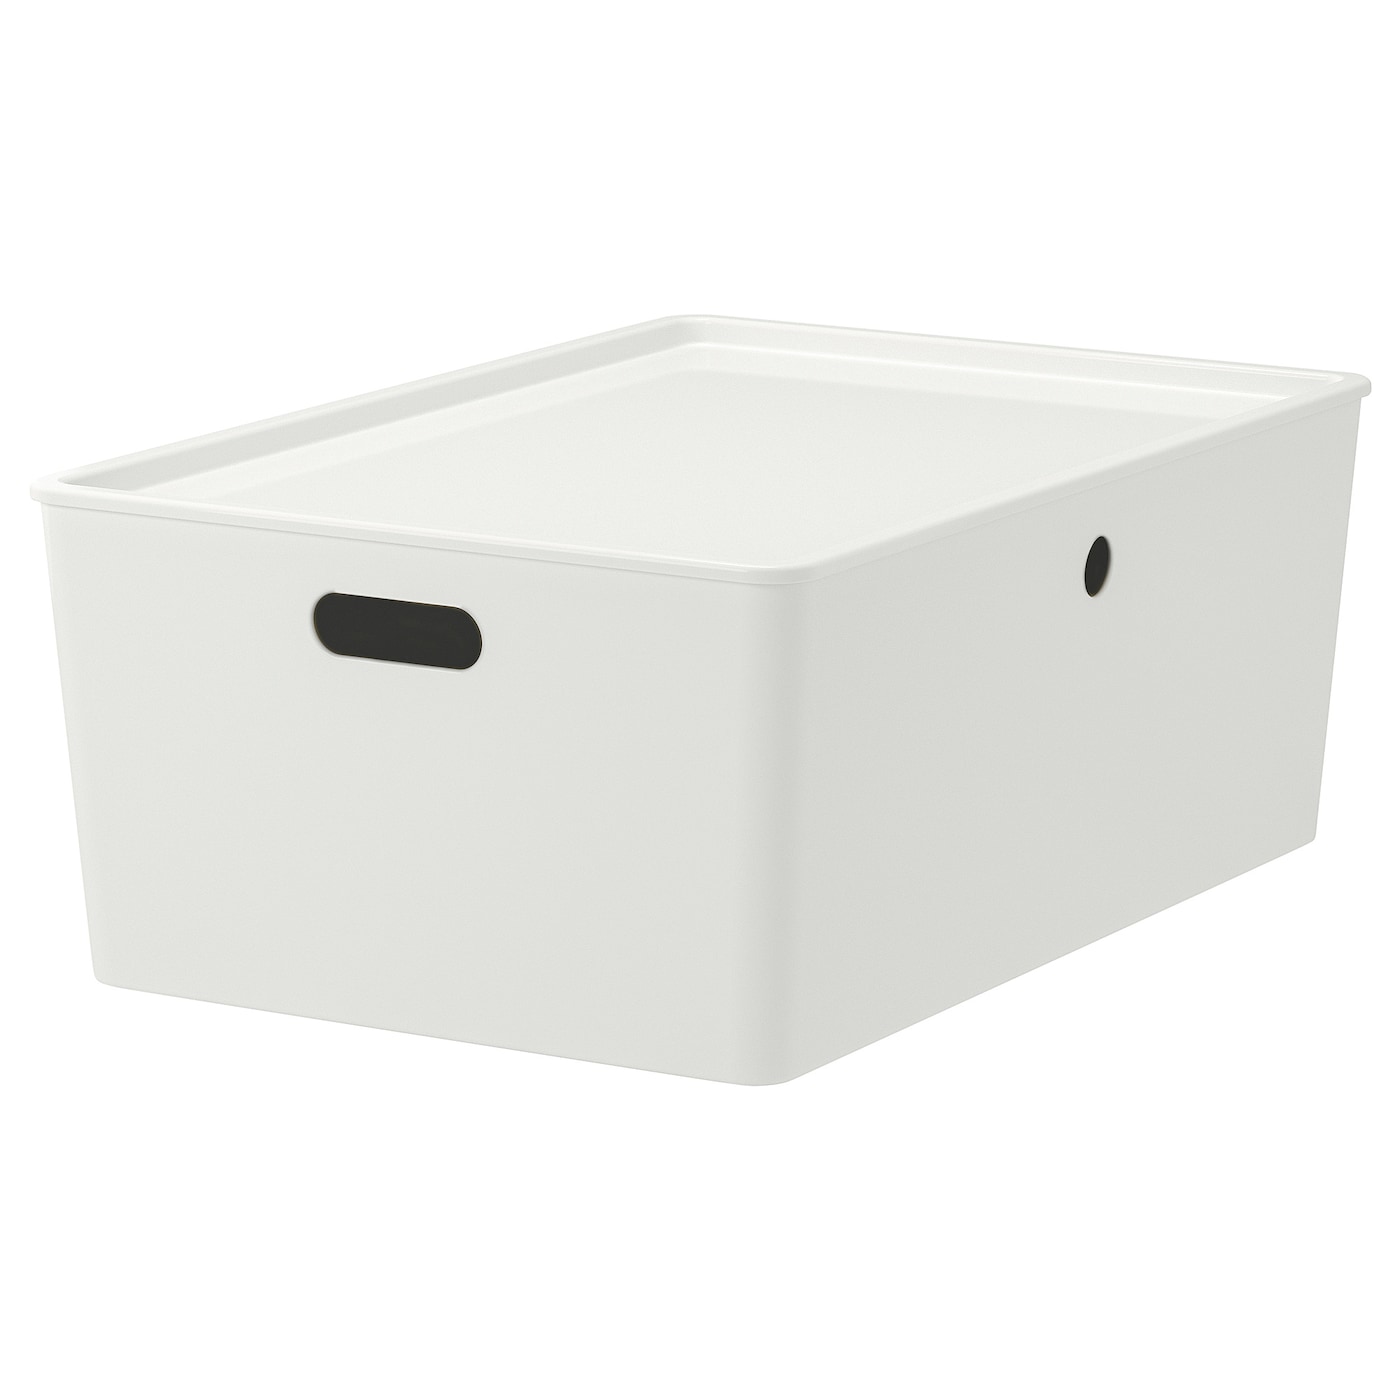 KUGGIS box with lid white - IKEA